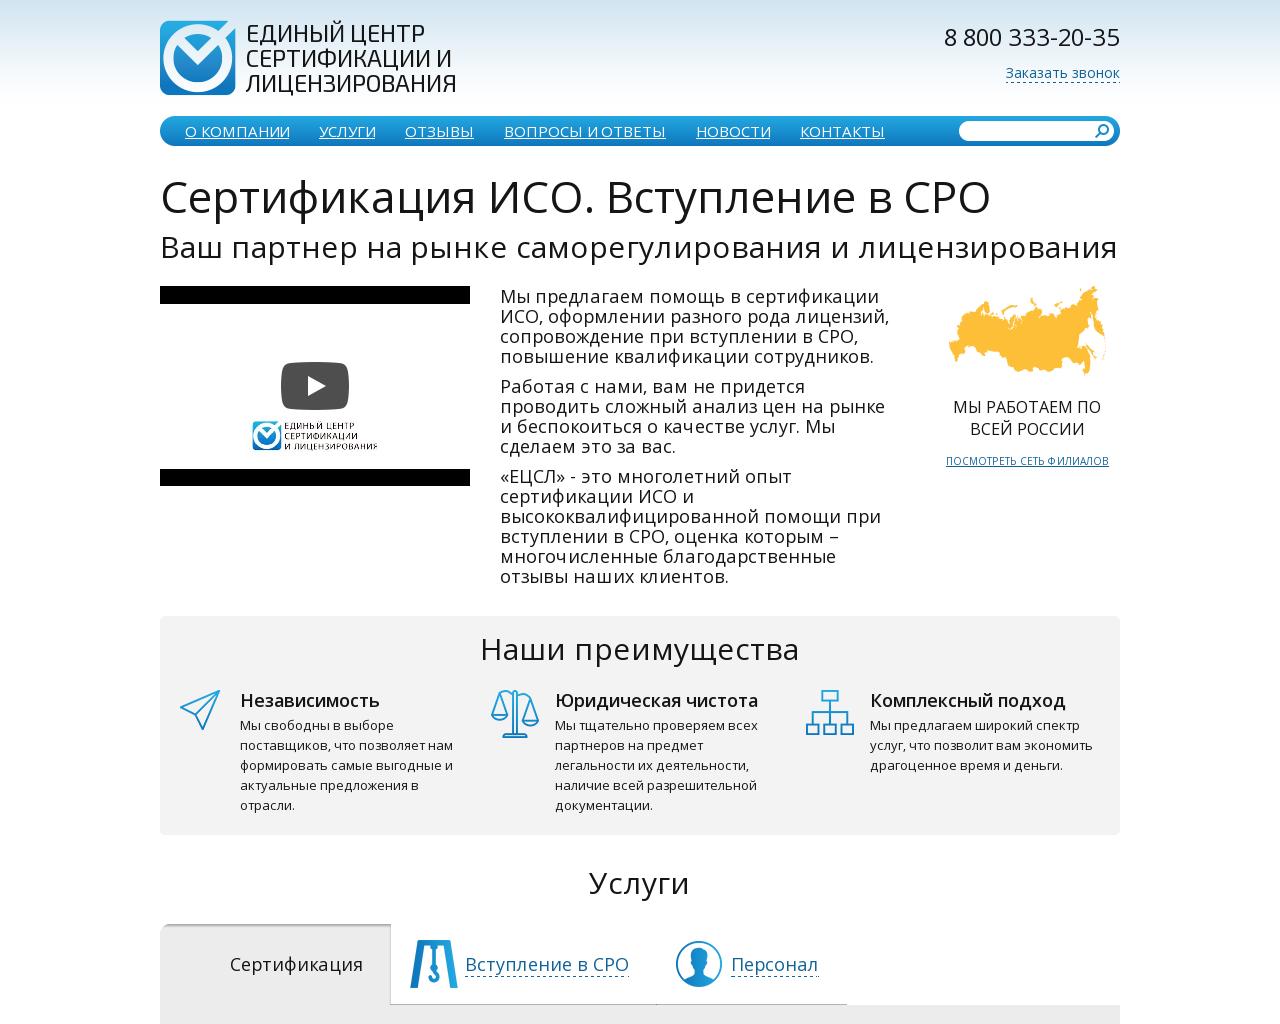 Изображение сайта uccl.ru в разрешении 1280x1024